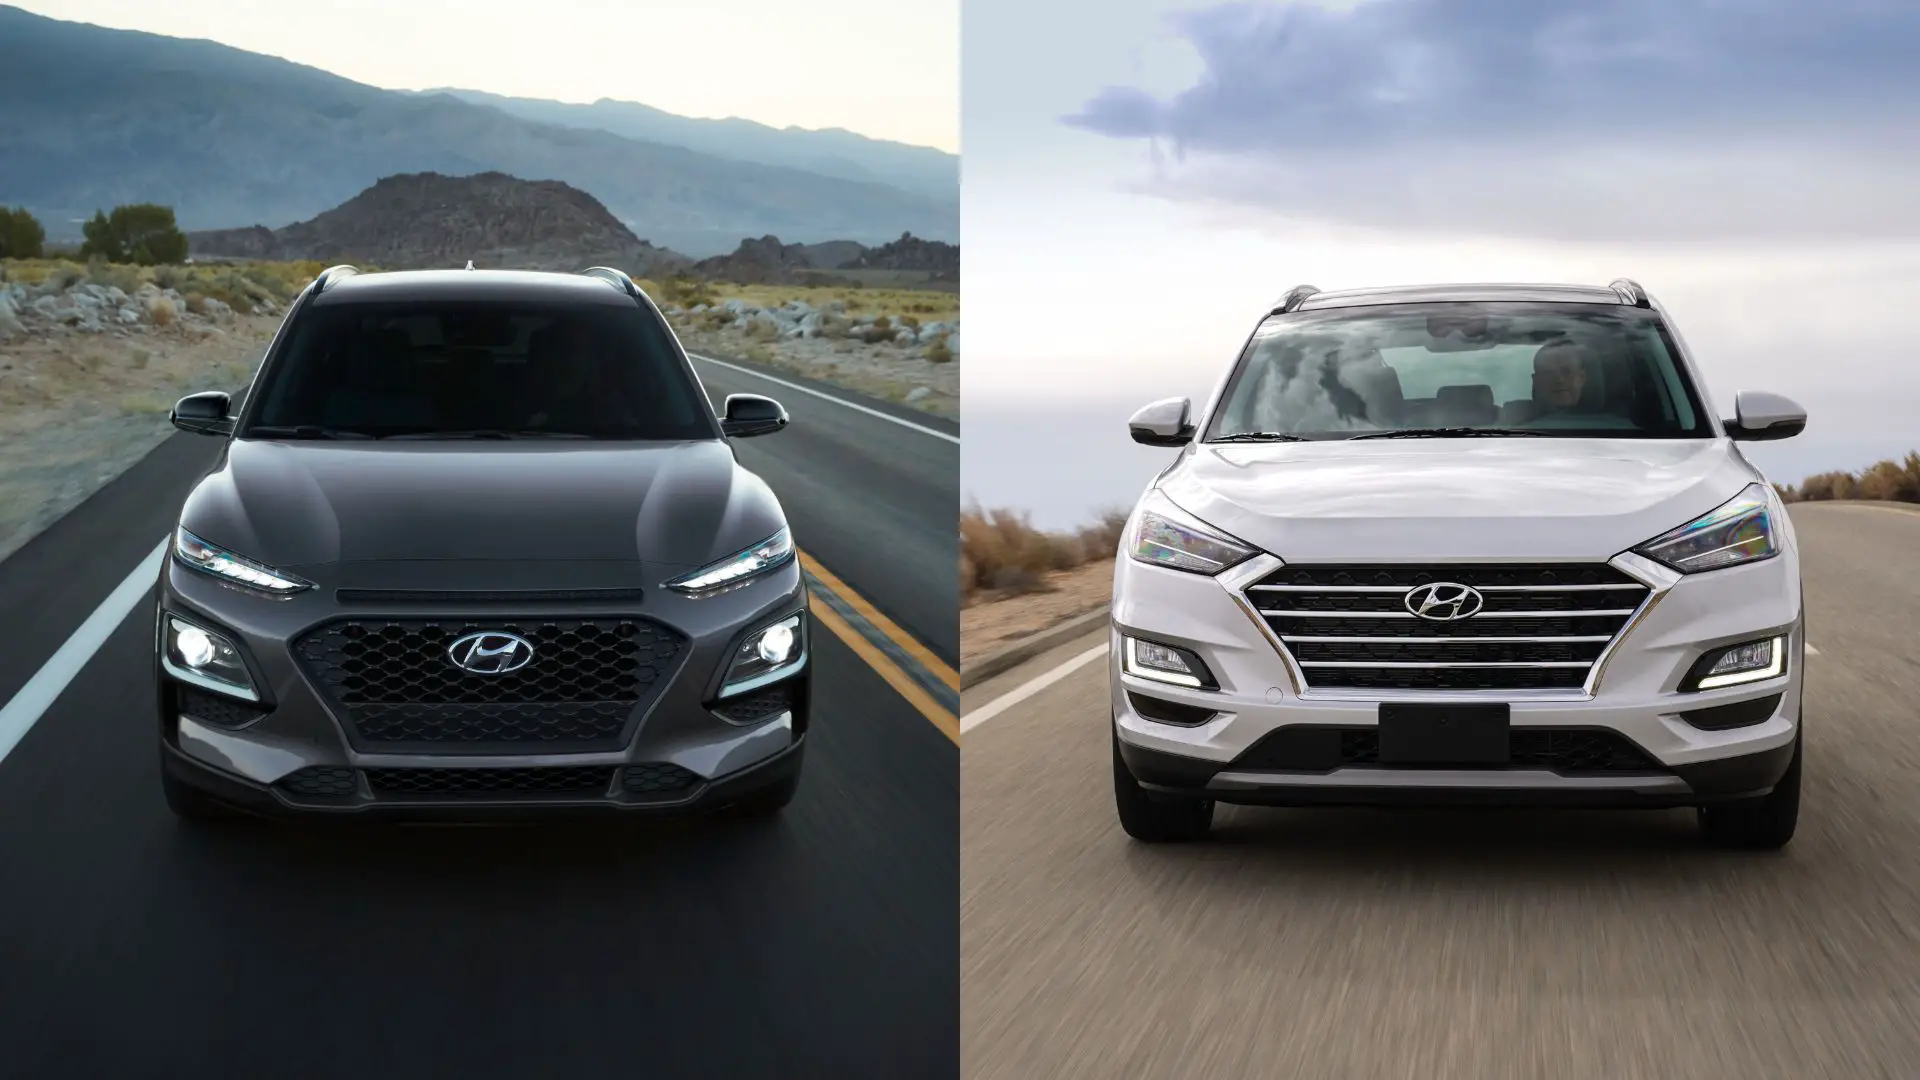 Hyundai Kona vs Tucson SUV comparison